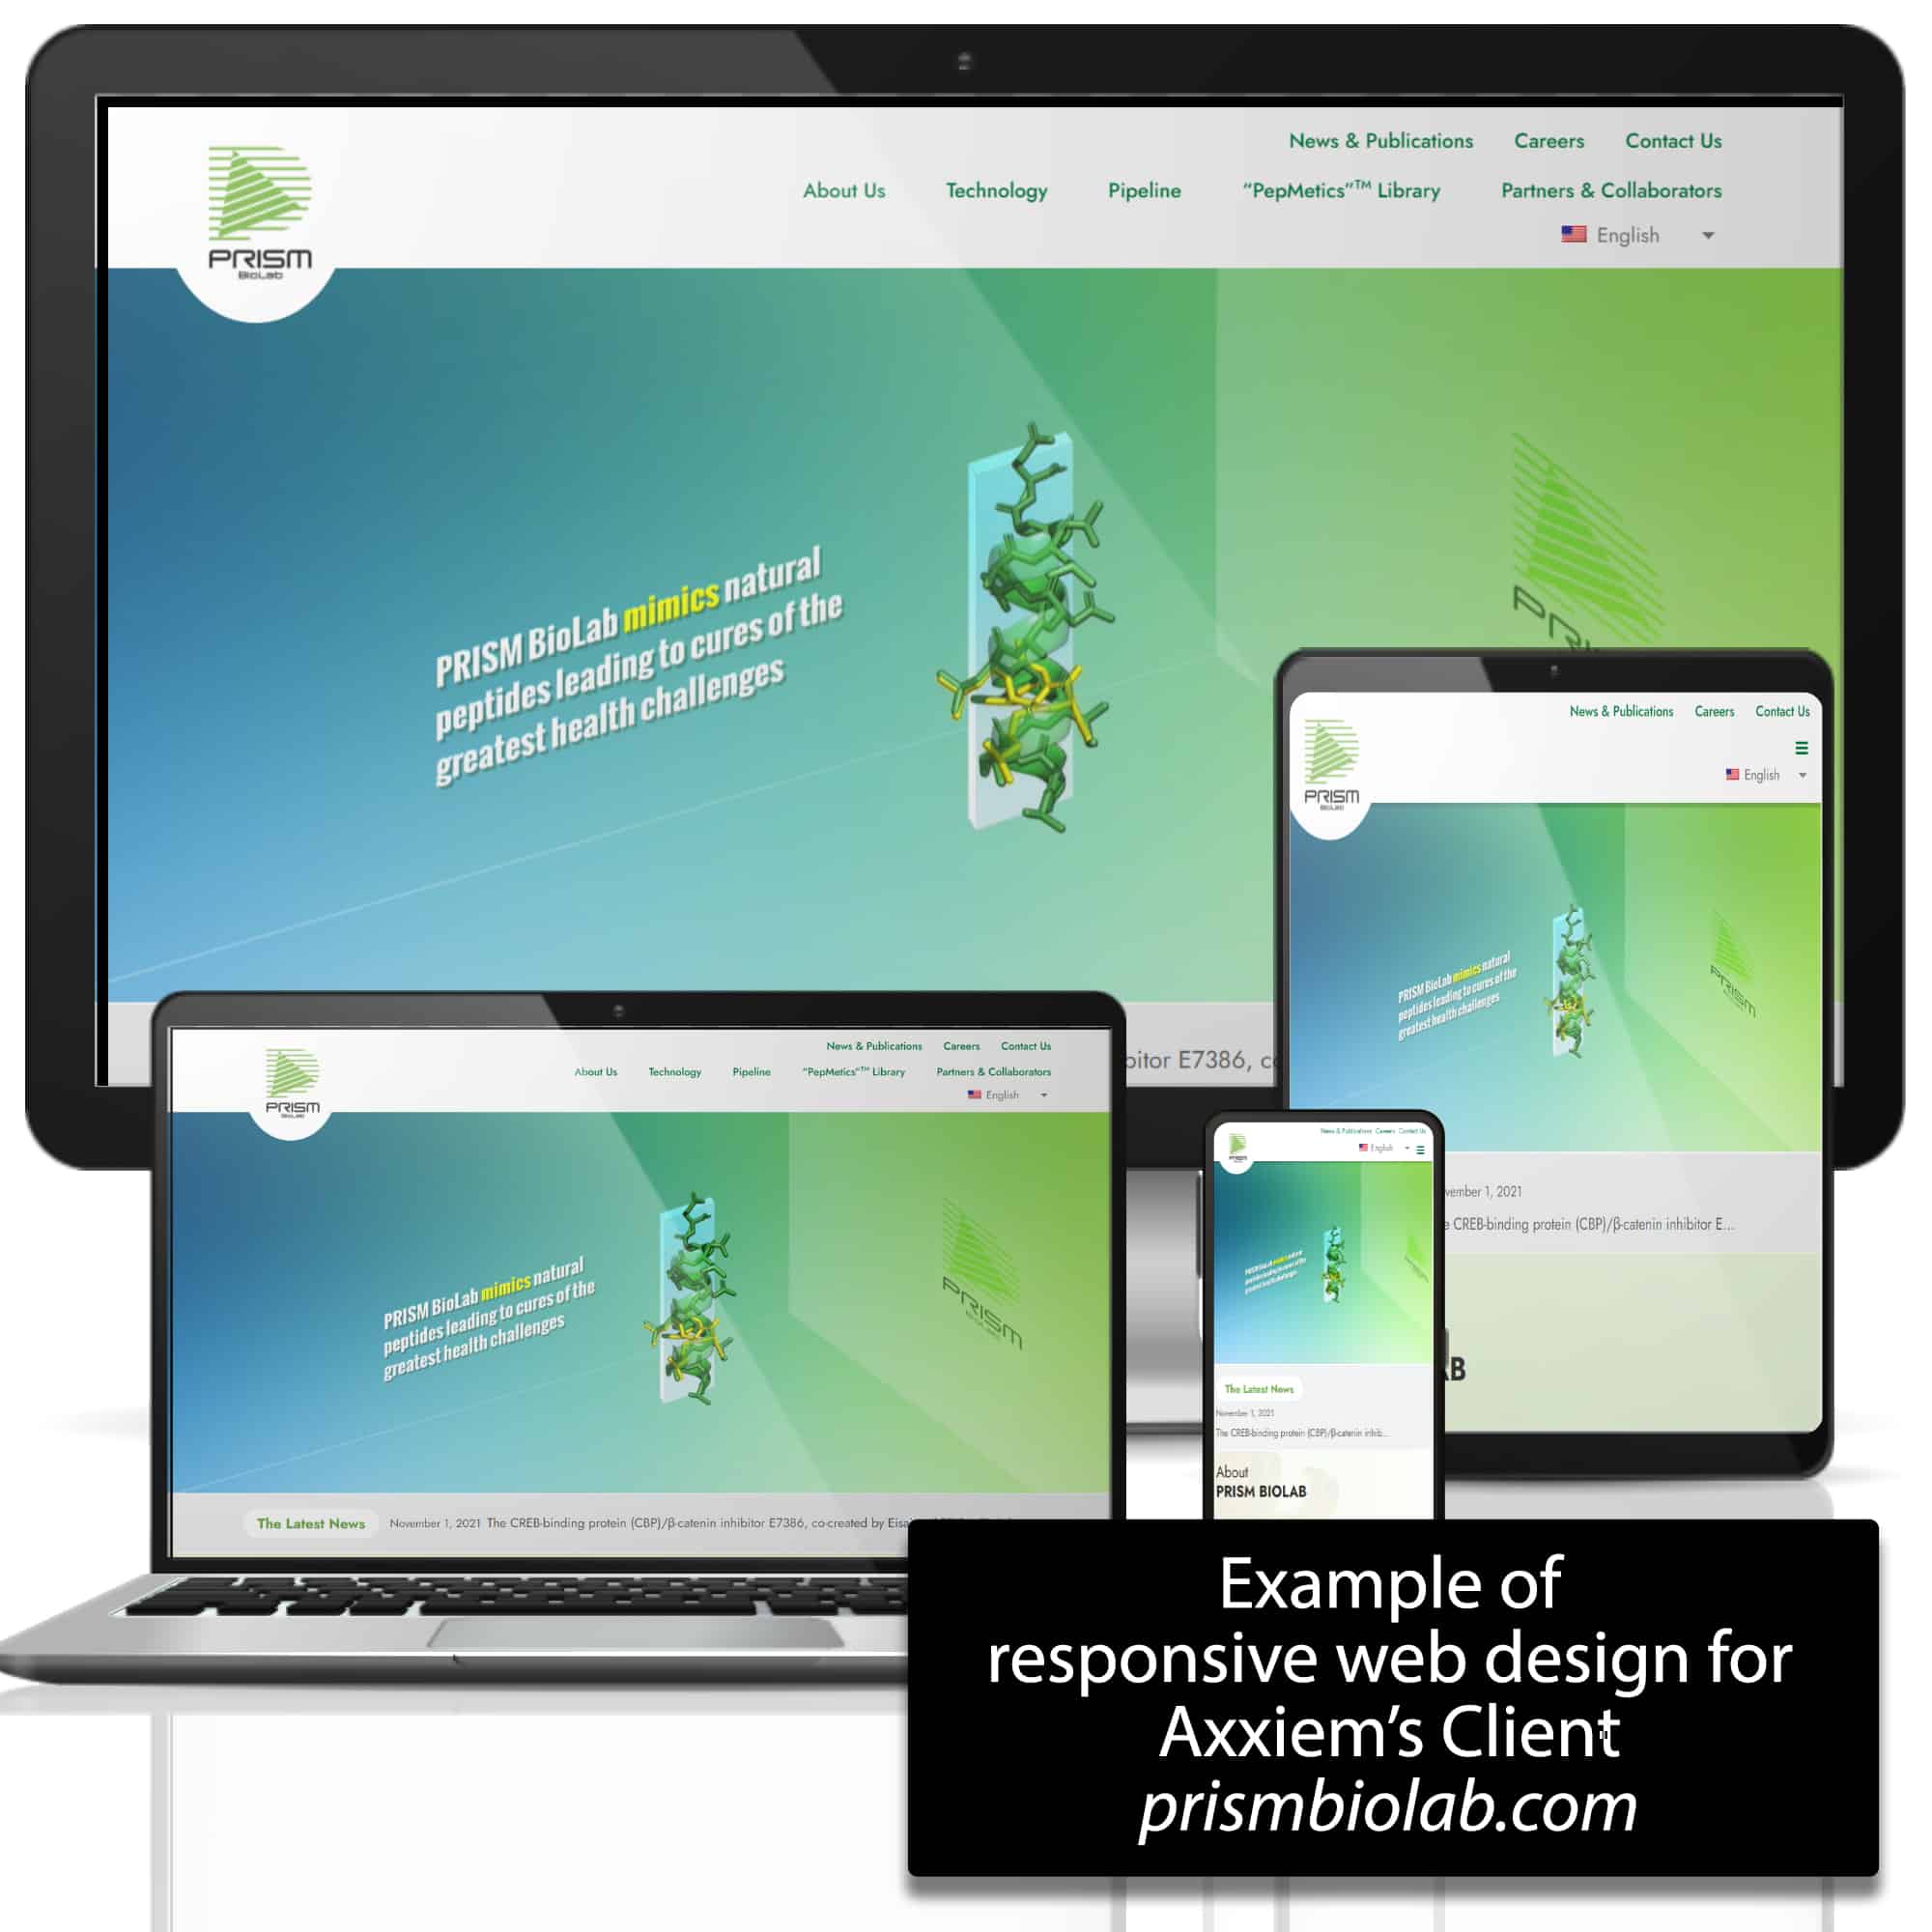 Biotech web design responsive design graphic image